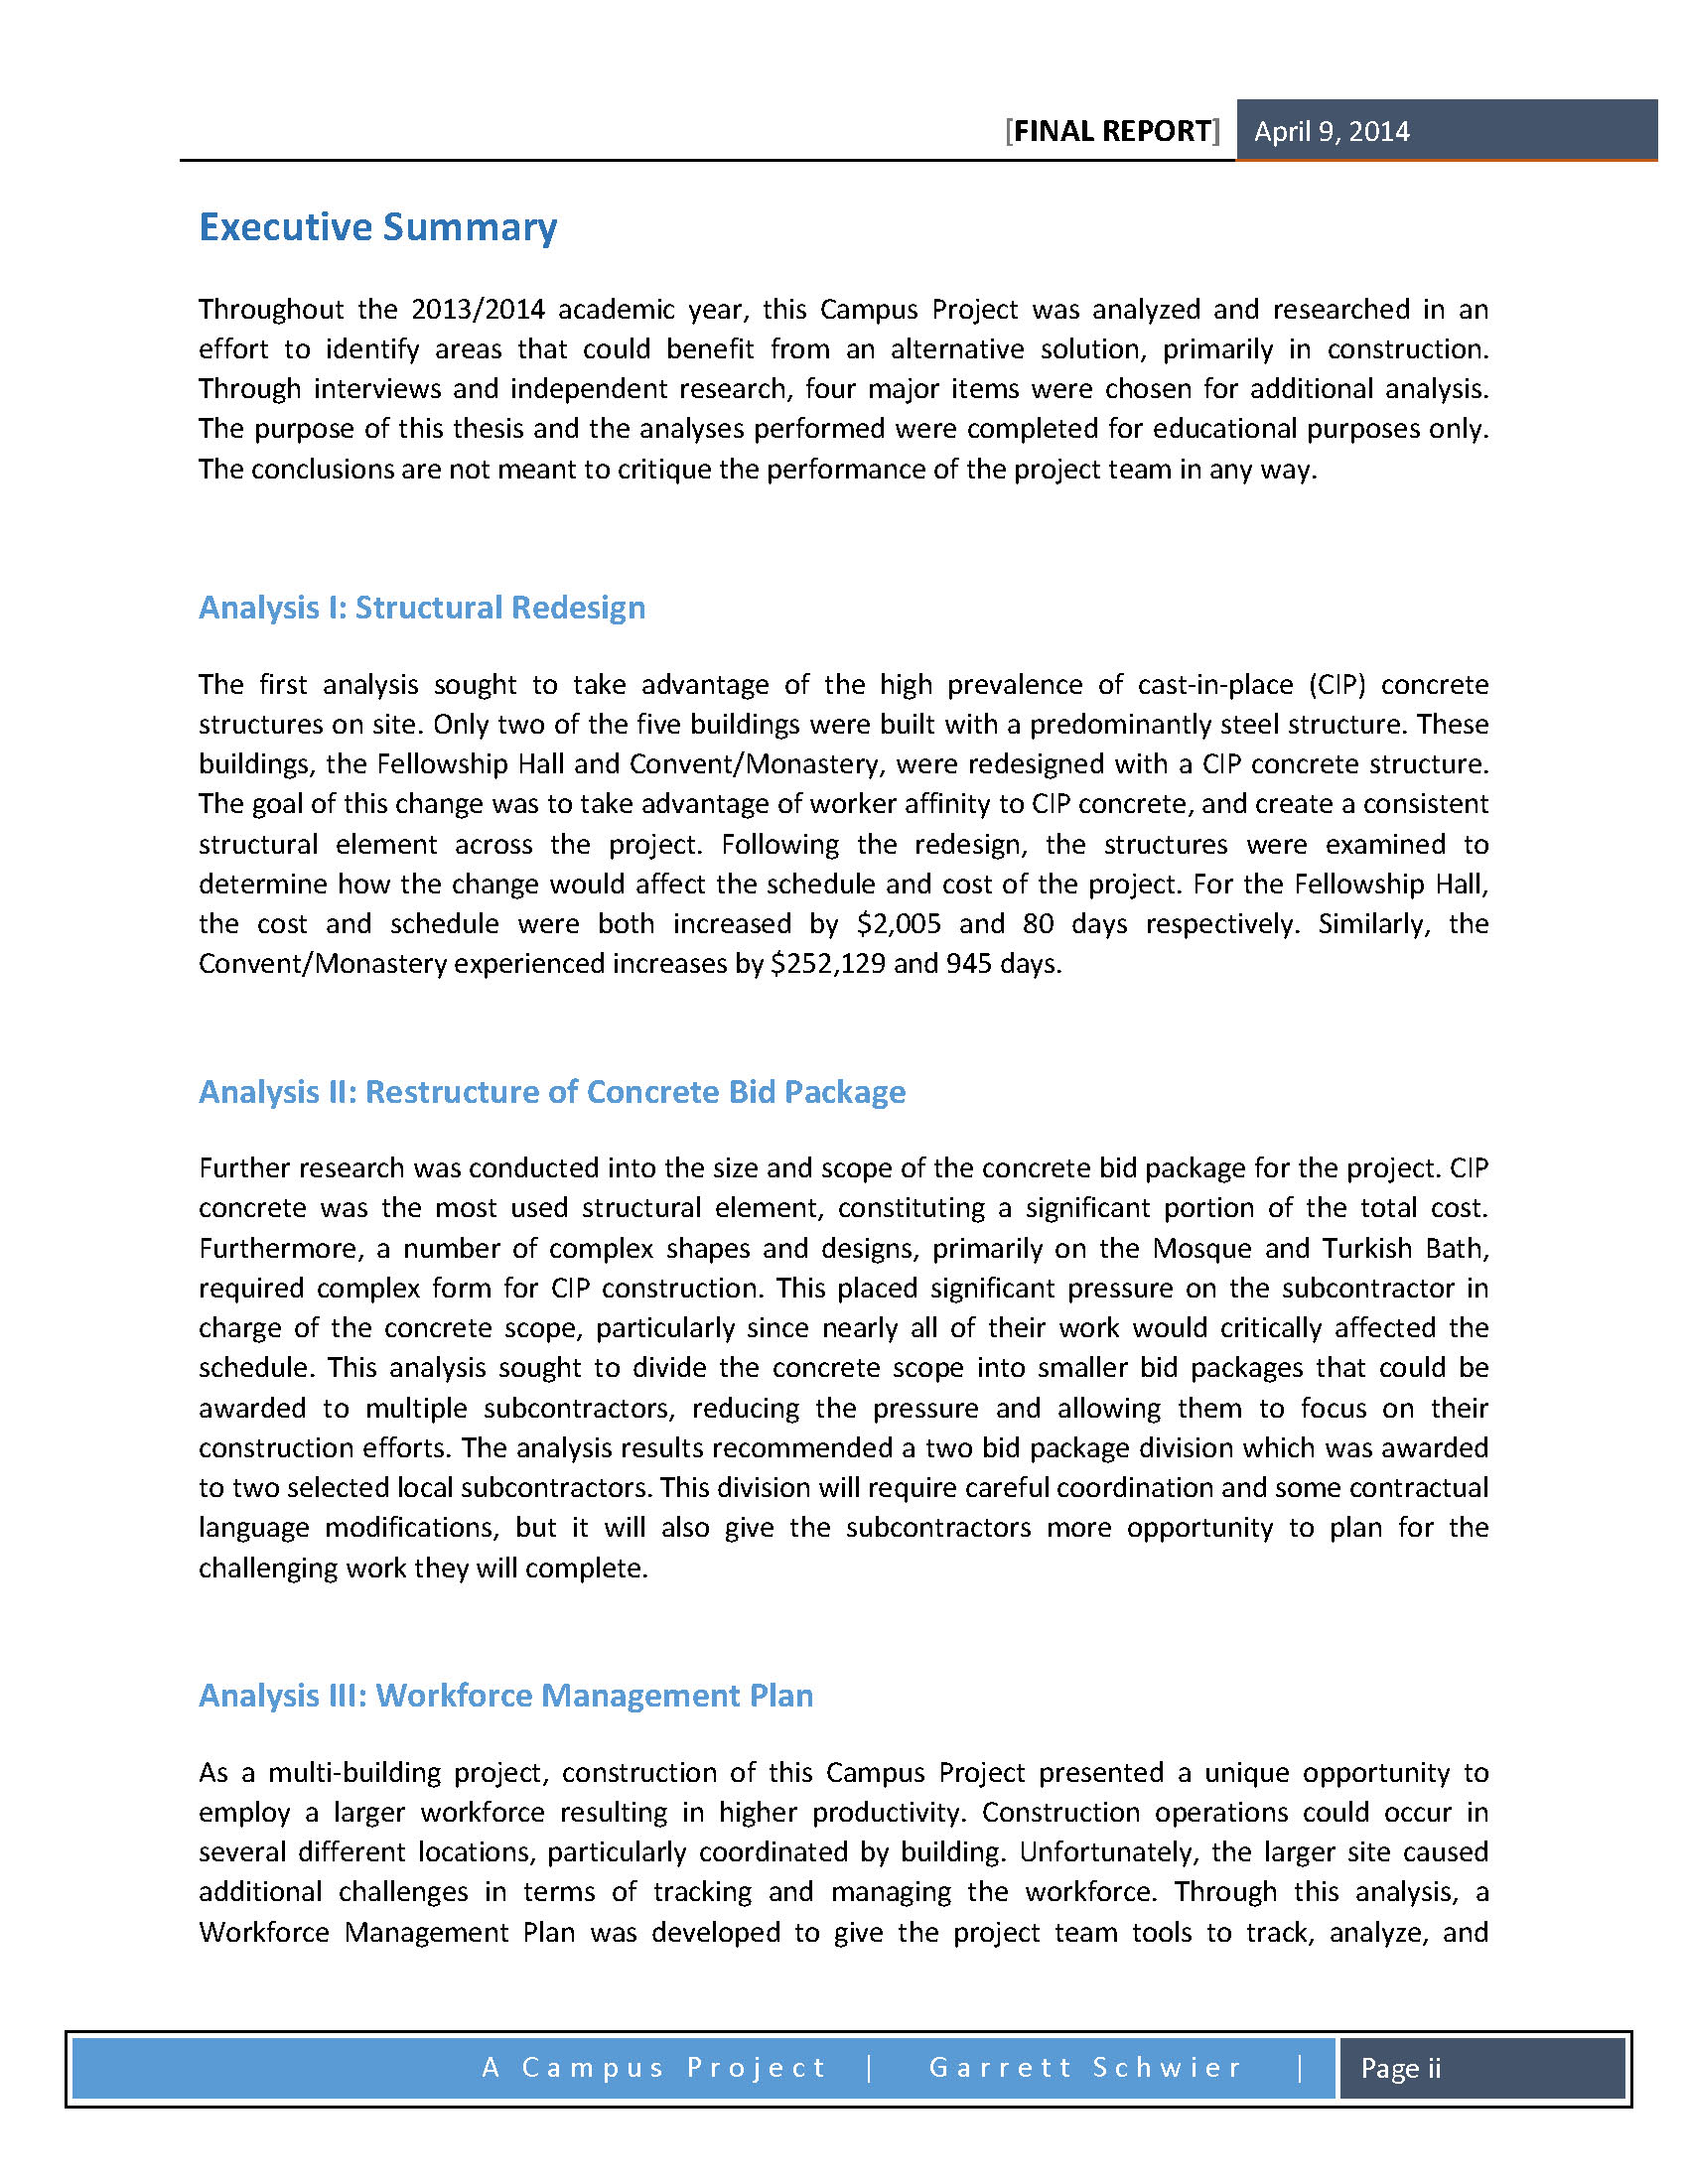 dissertation project report pdf